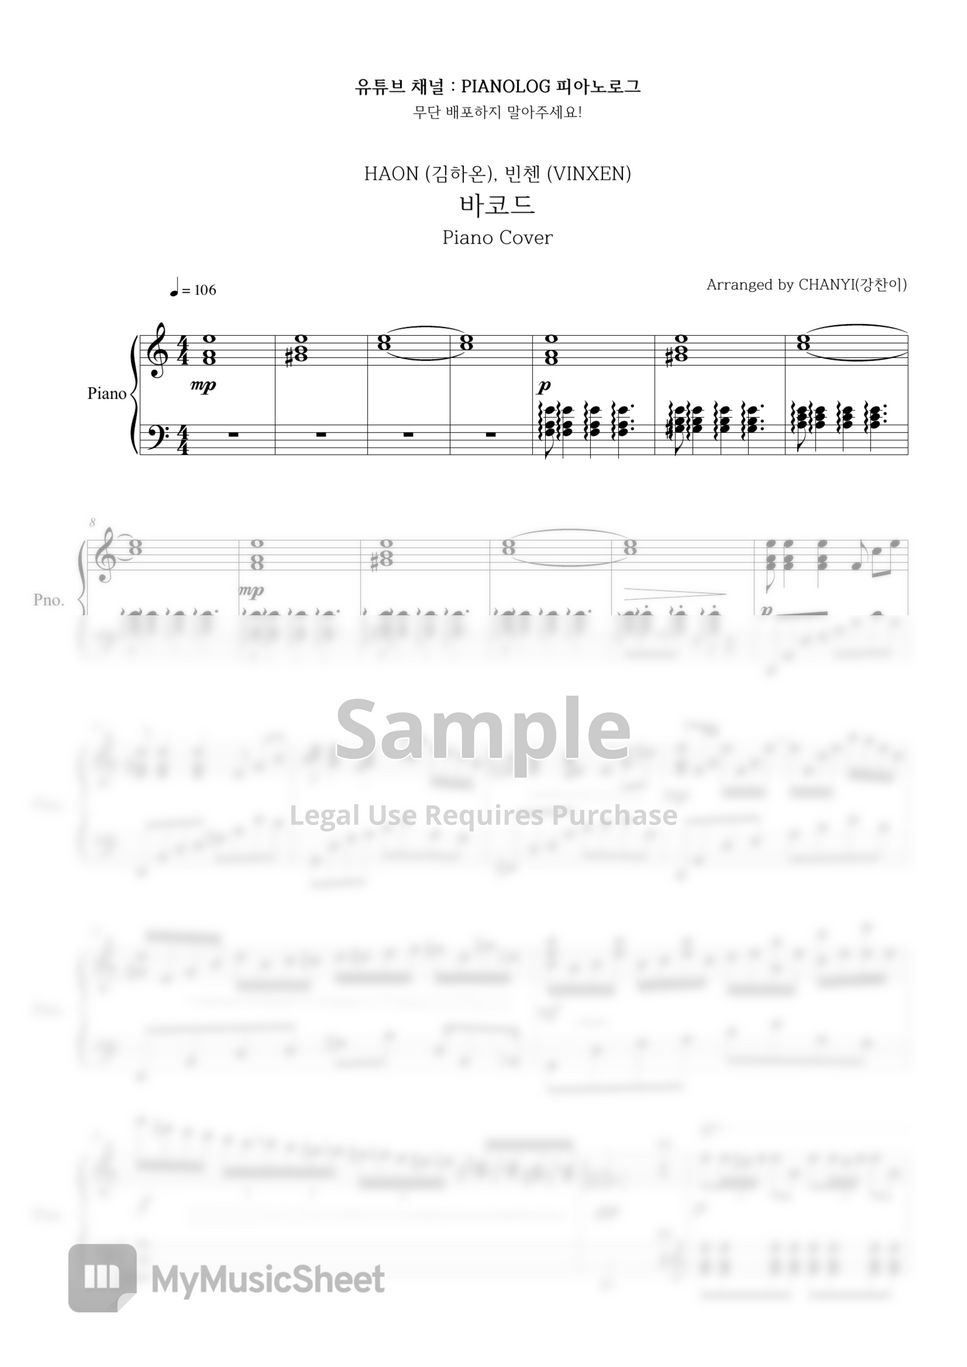 HAON, Vinxen - Barcode by Pianolog